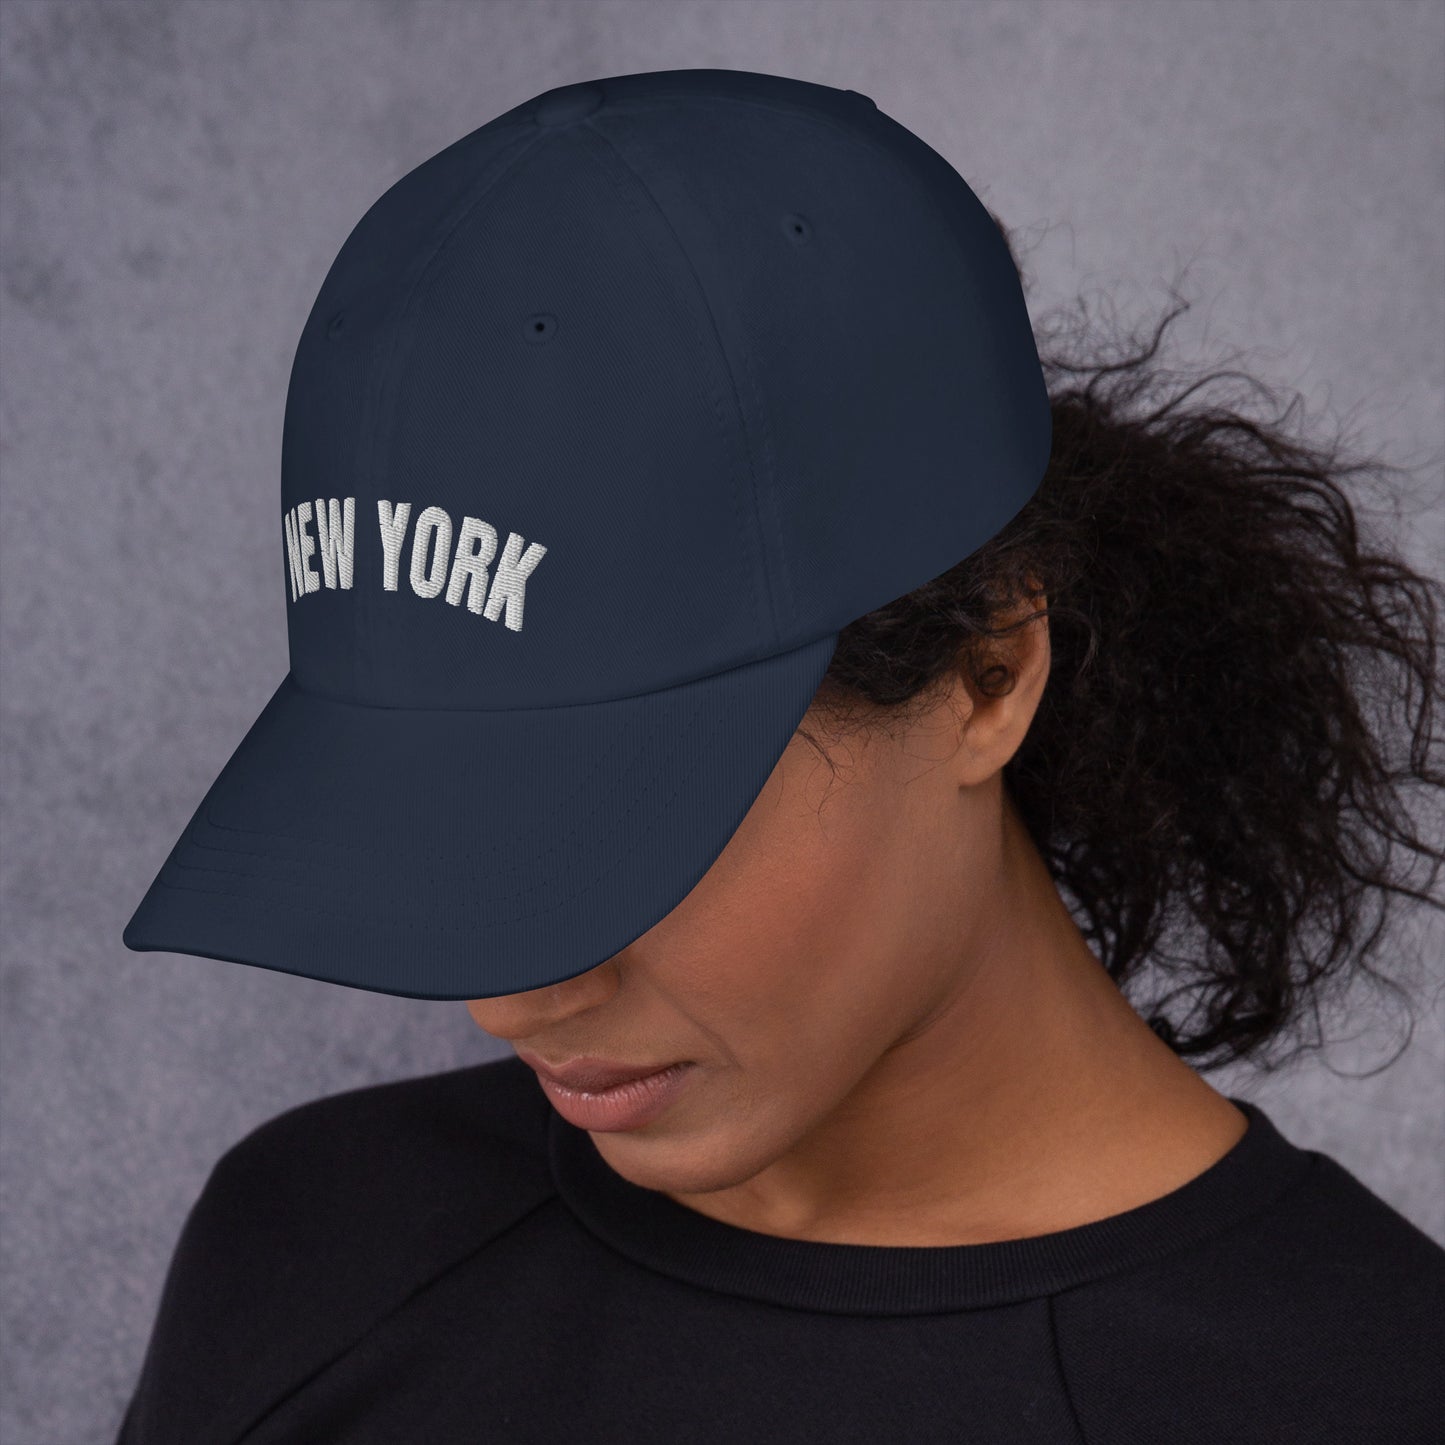 New York Baseball Cap - Navy